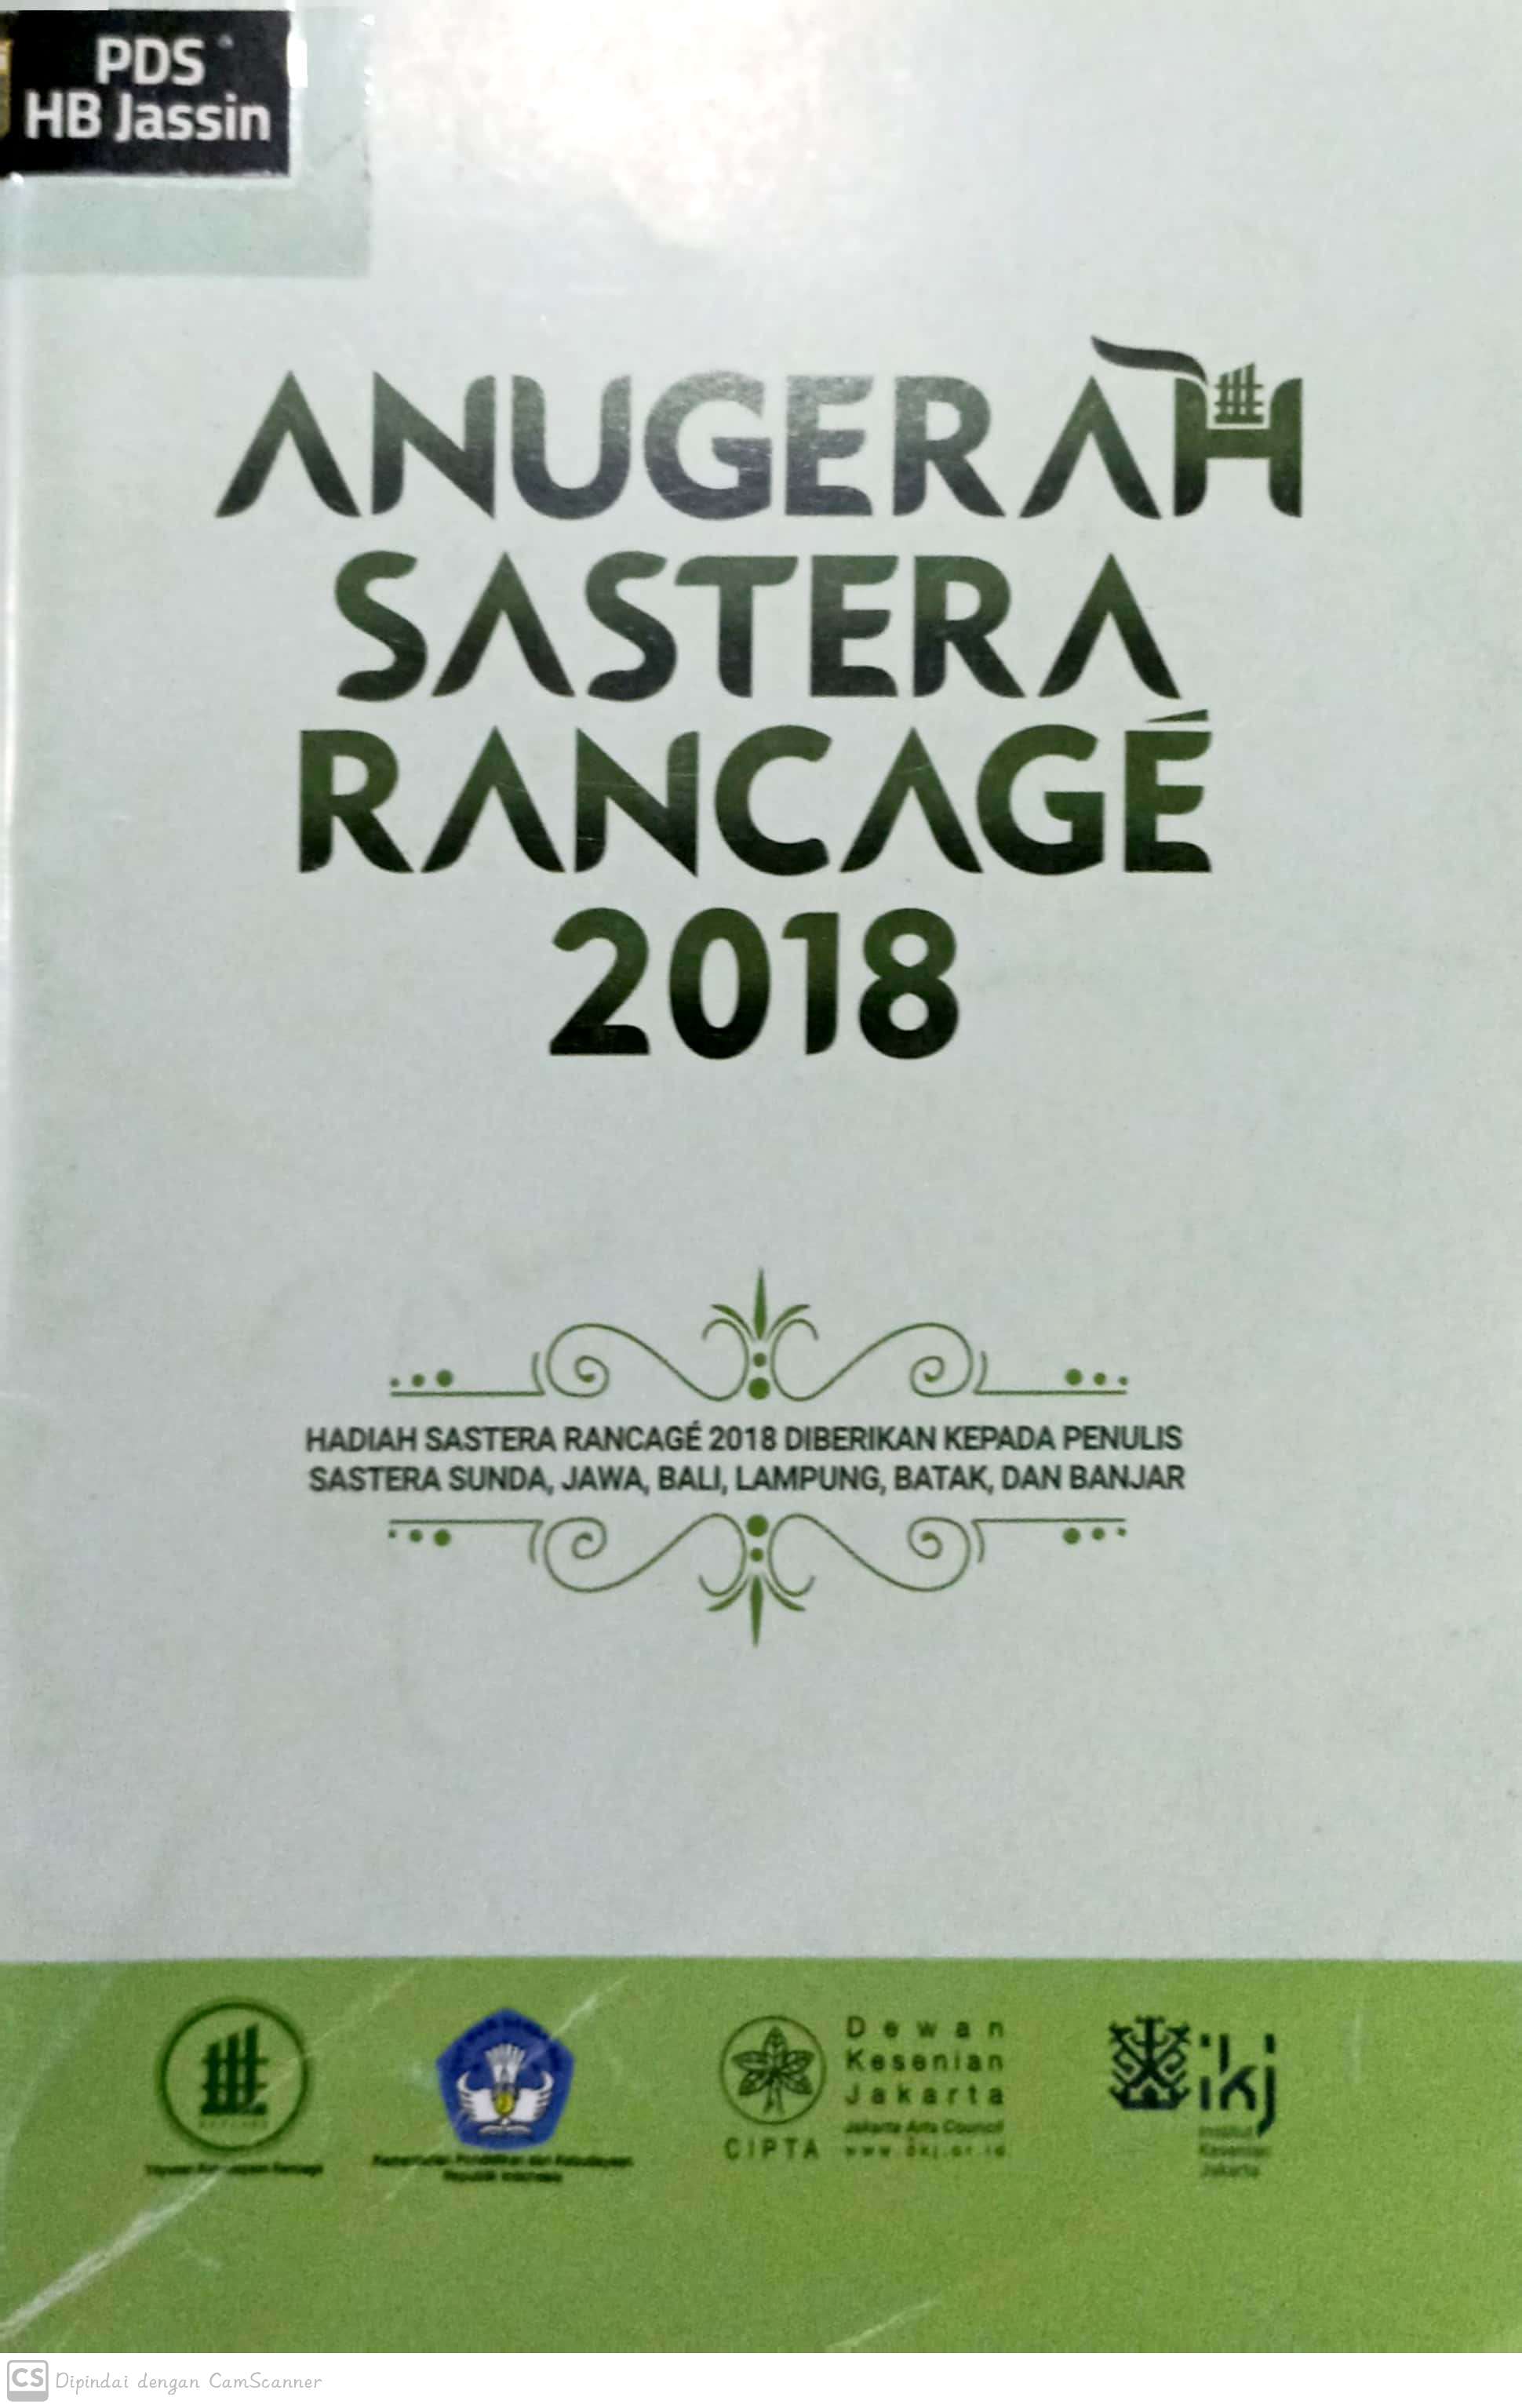 Anugerah sastera rancage 2018